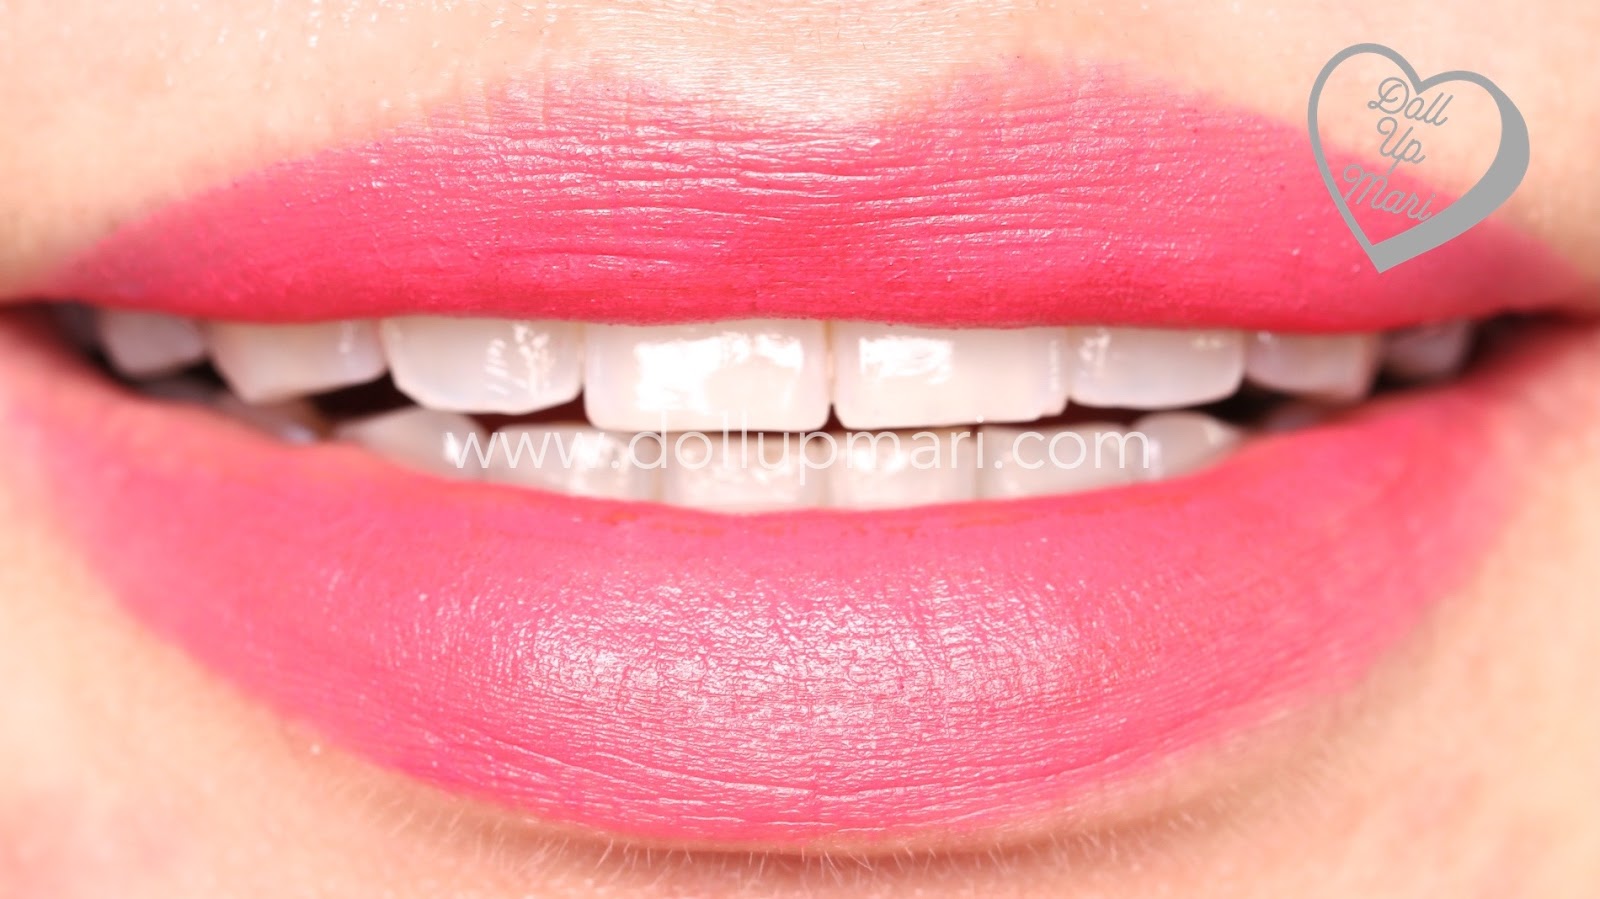 lip swatch of Vibrant Melon shade of AVON Perfectly Matte Lipstick